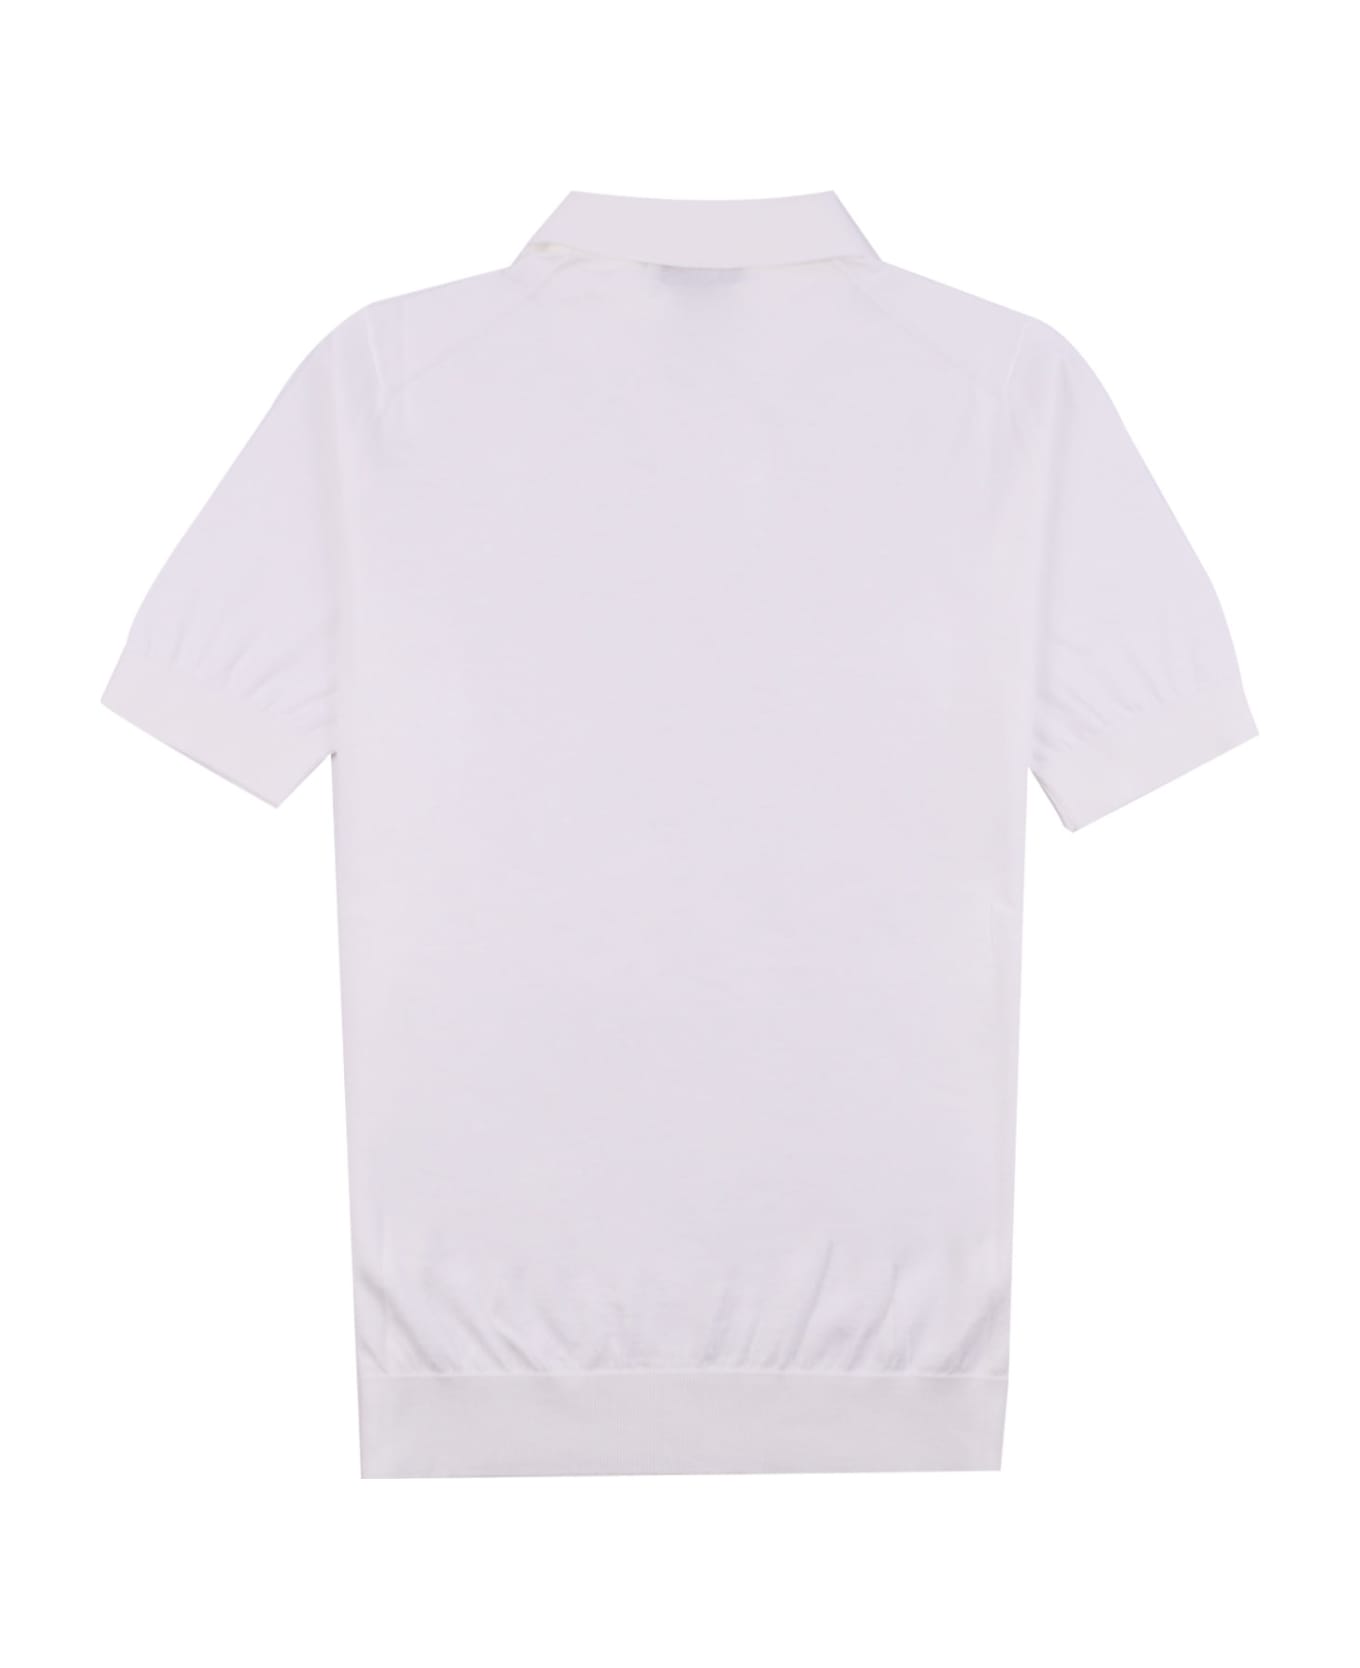 Filippo De Laurentiis T-shirt - White ポロシャツ